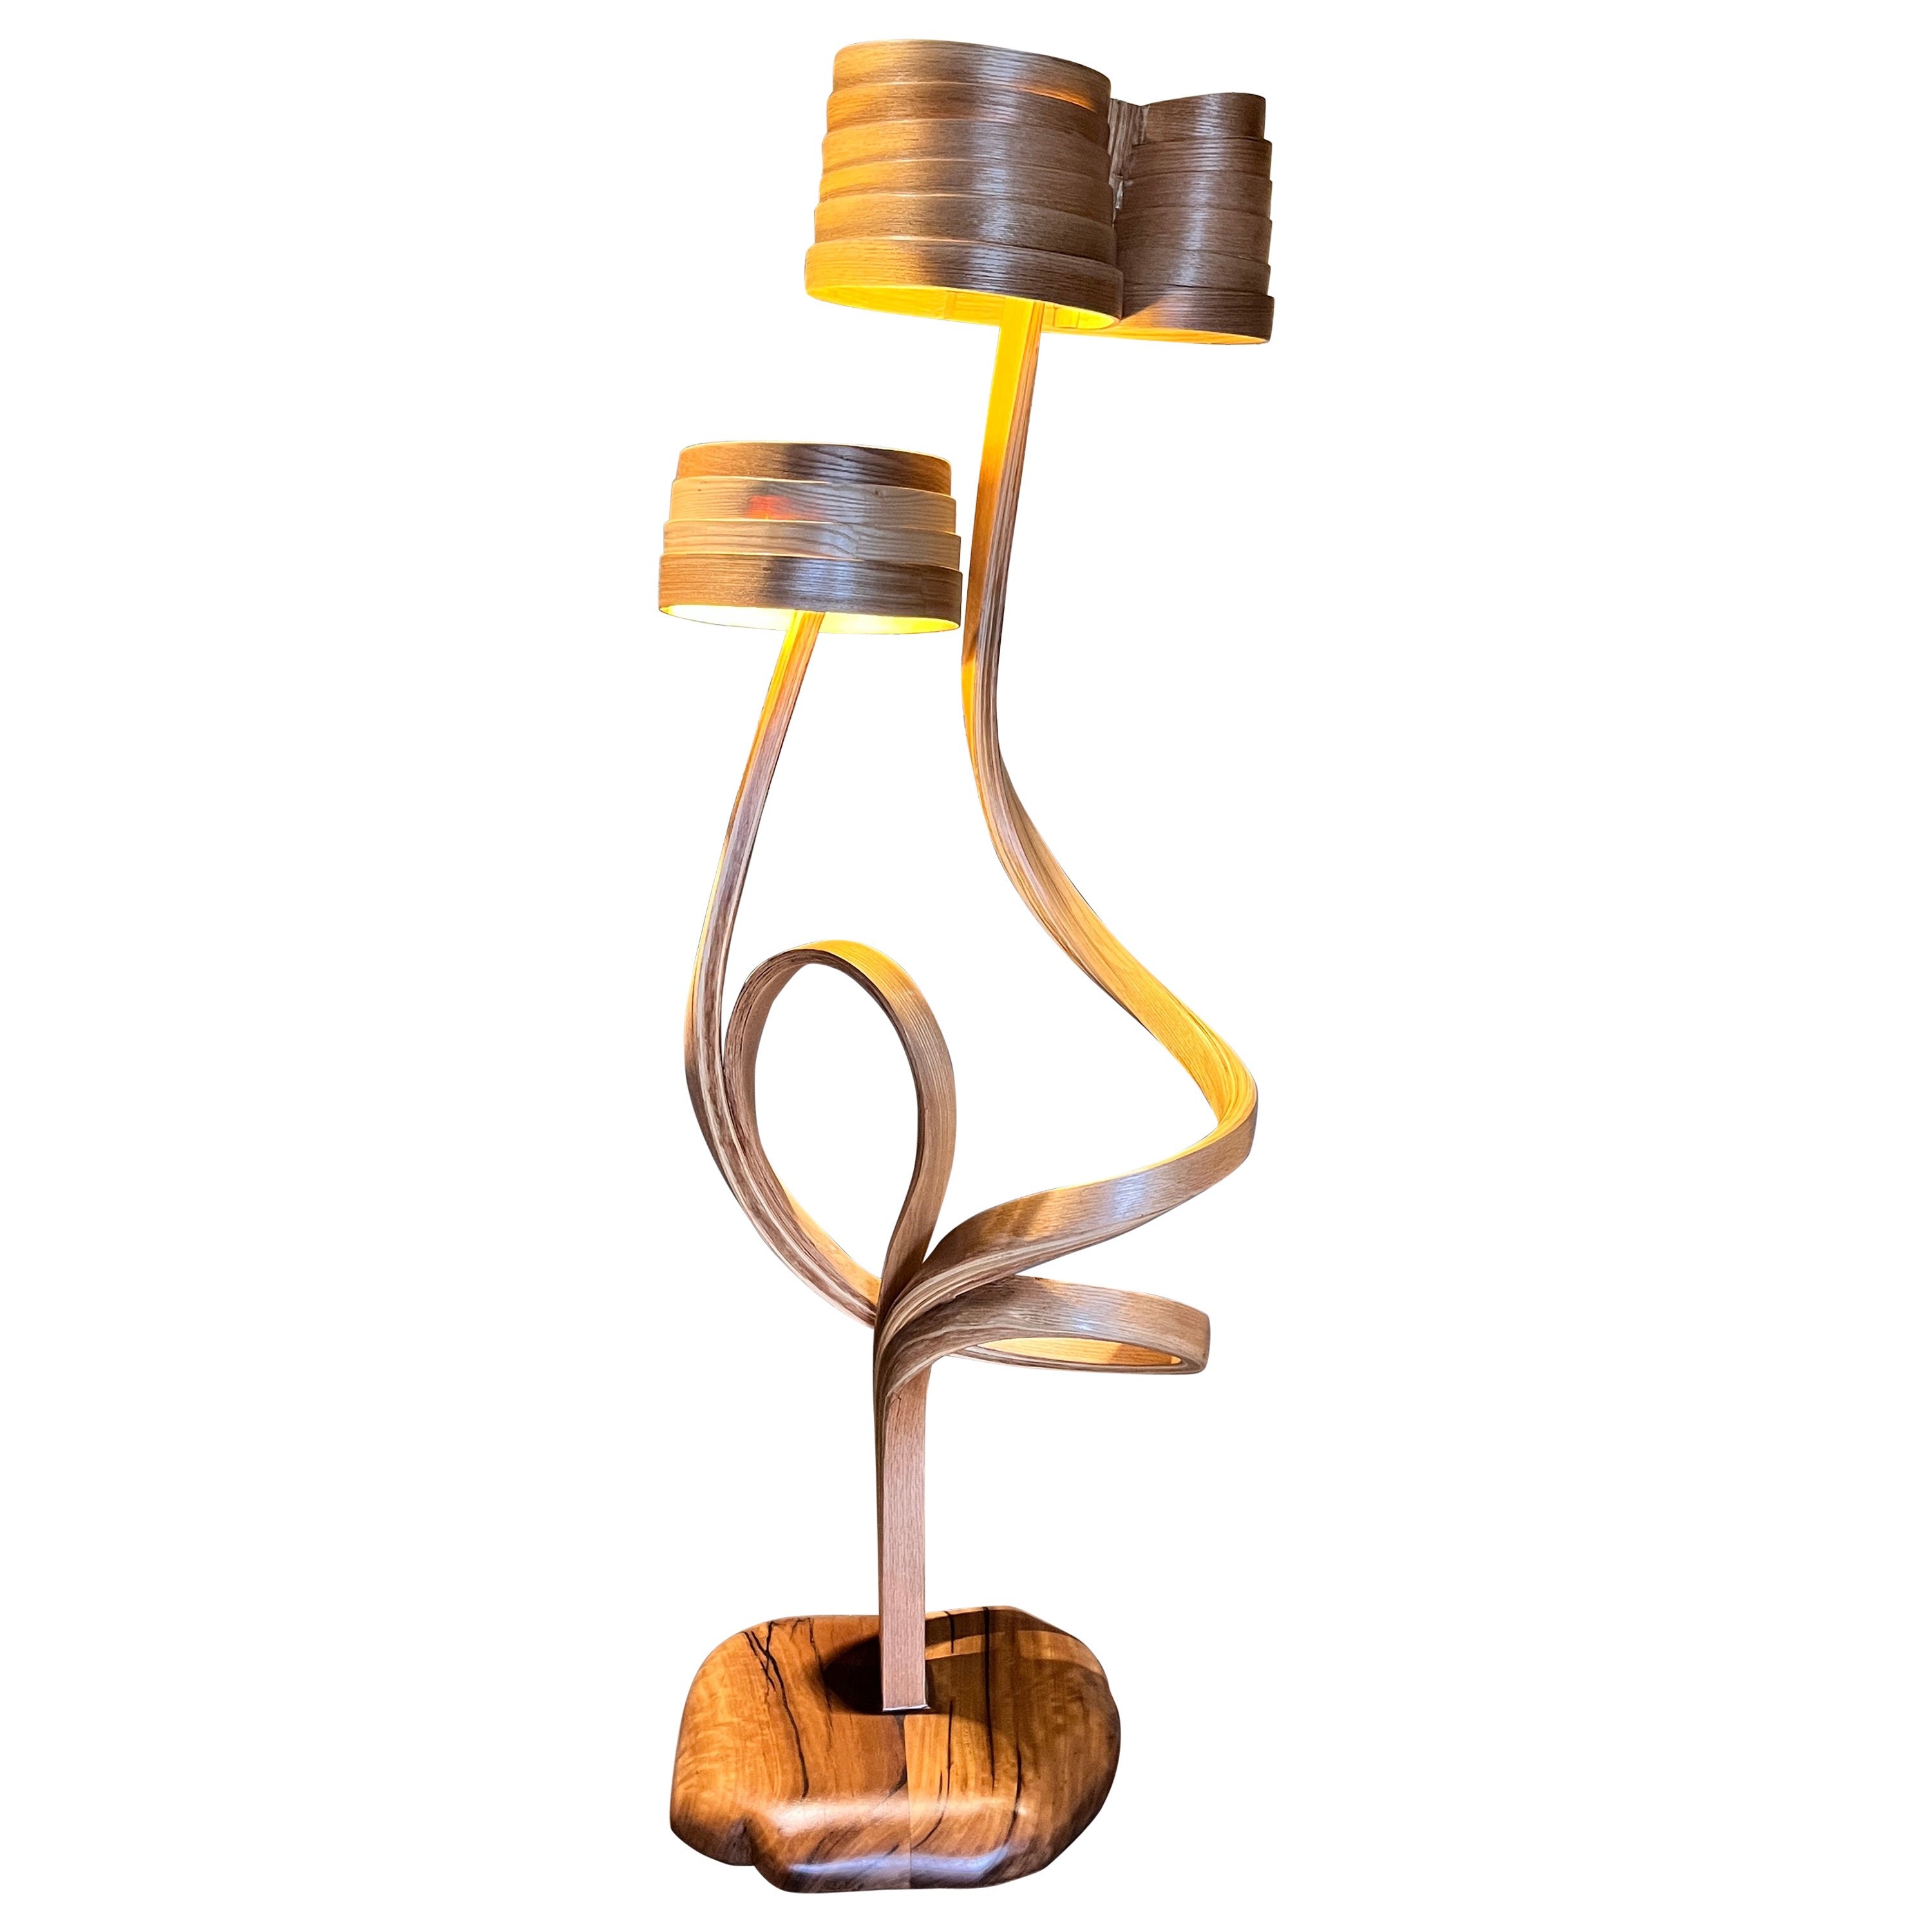 Two Tier Floor Lamp Made by Bending Wood